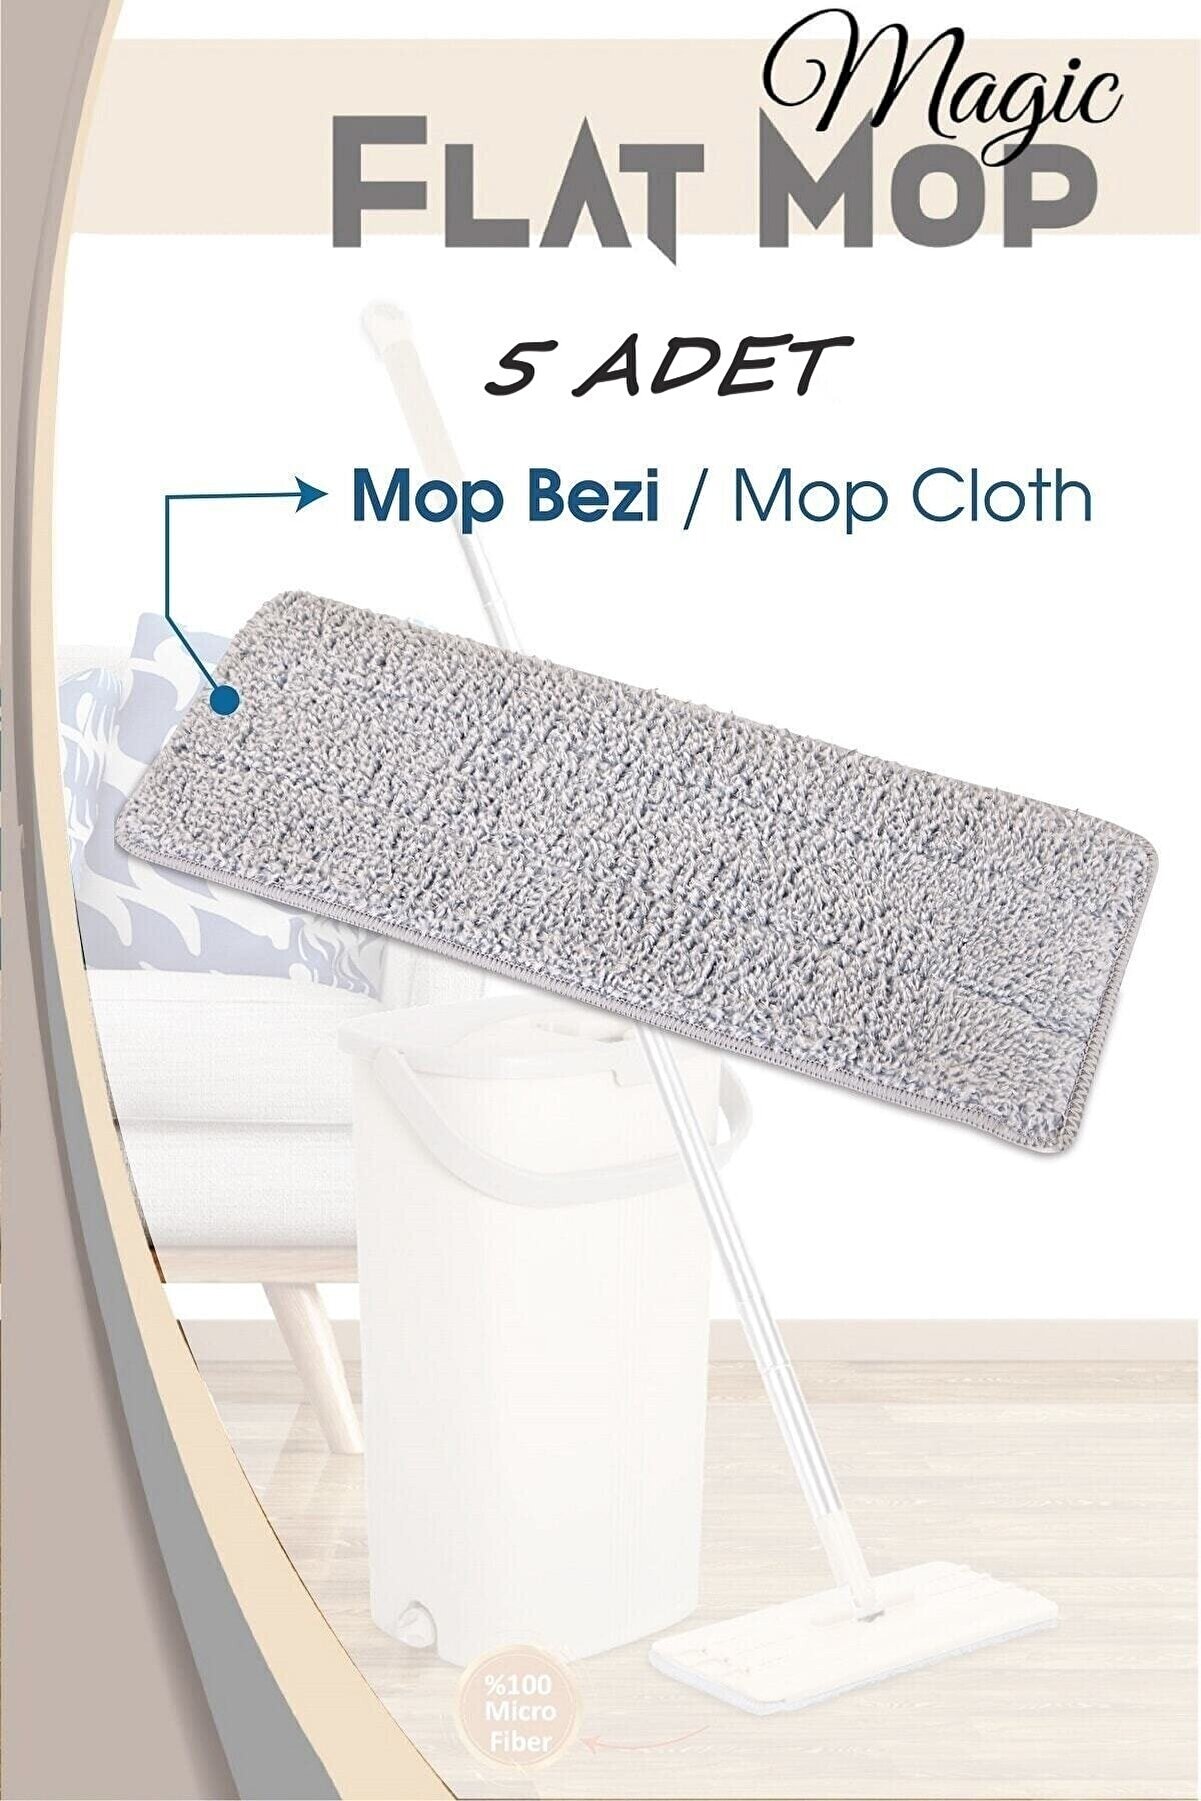 glassepet 5 Adet Magic Flat (TABLET) Mop Yedek Bez